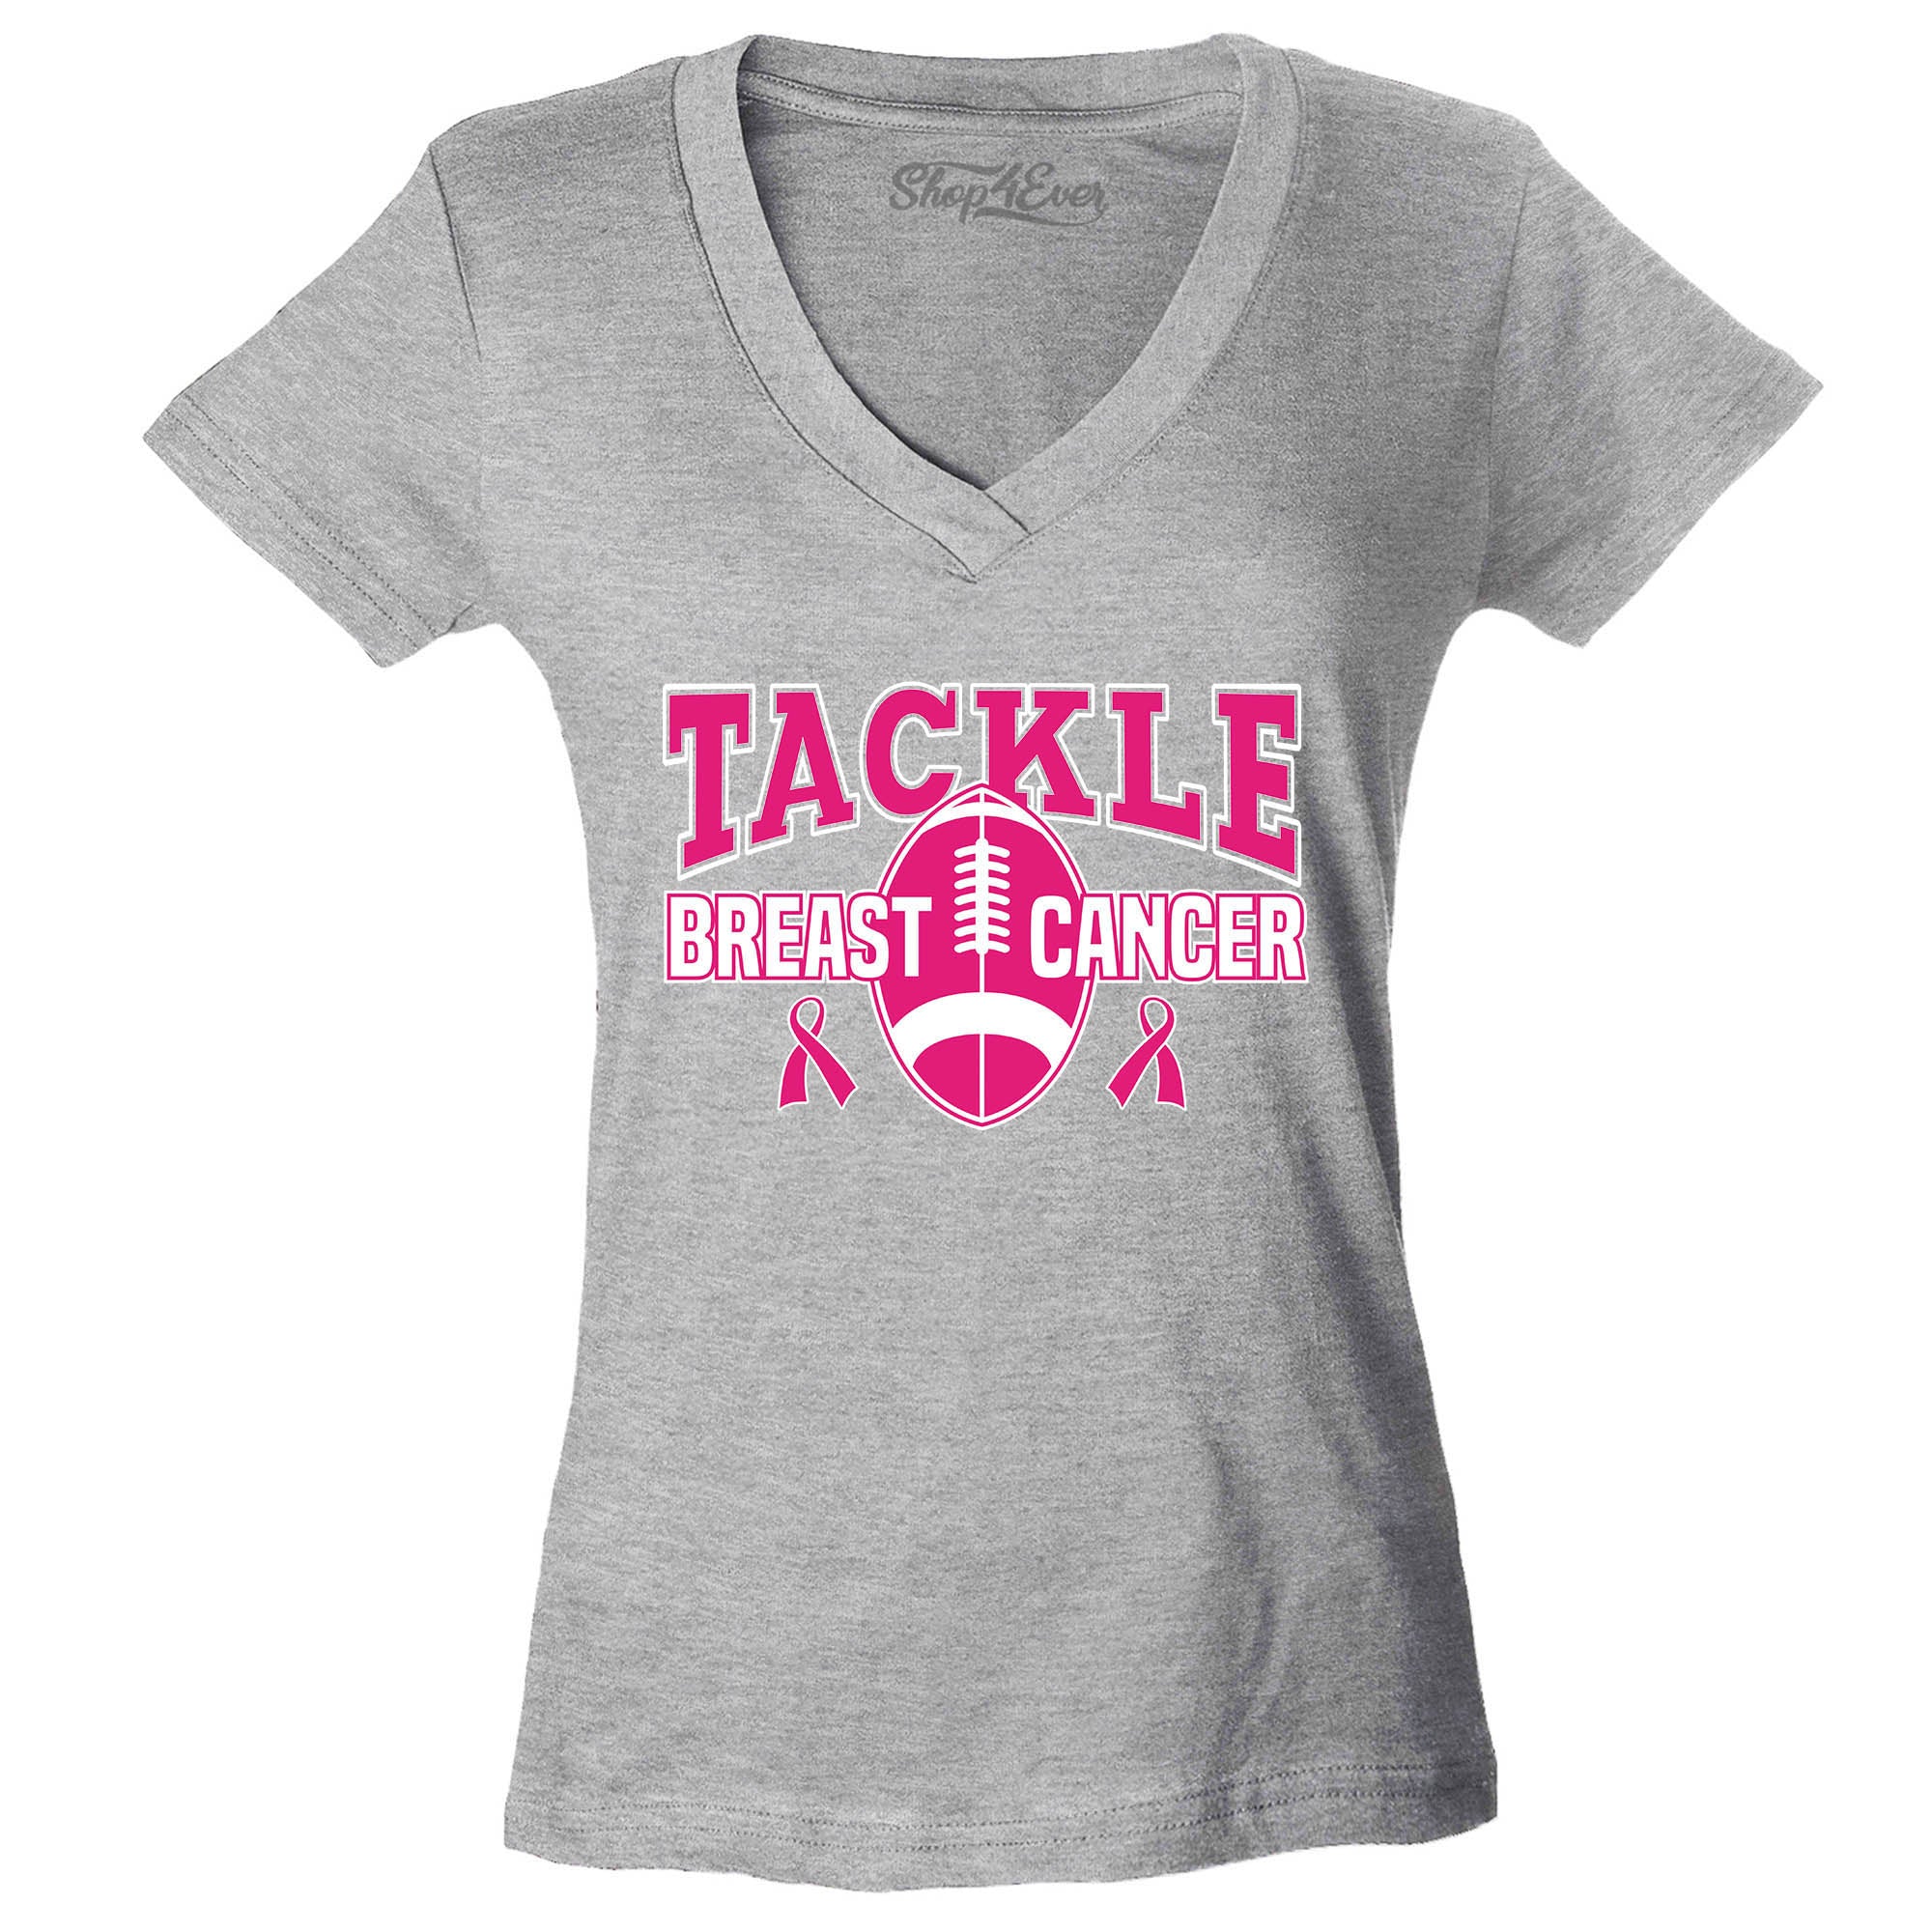 Tackle Breast Cancer Awareness Women's V-Neck T-Shirt Football Pink Ribbon Shirts Slim Fit